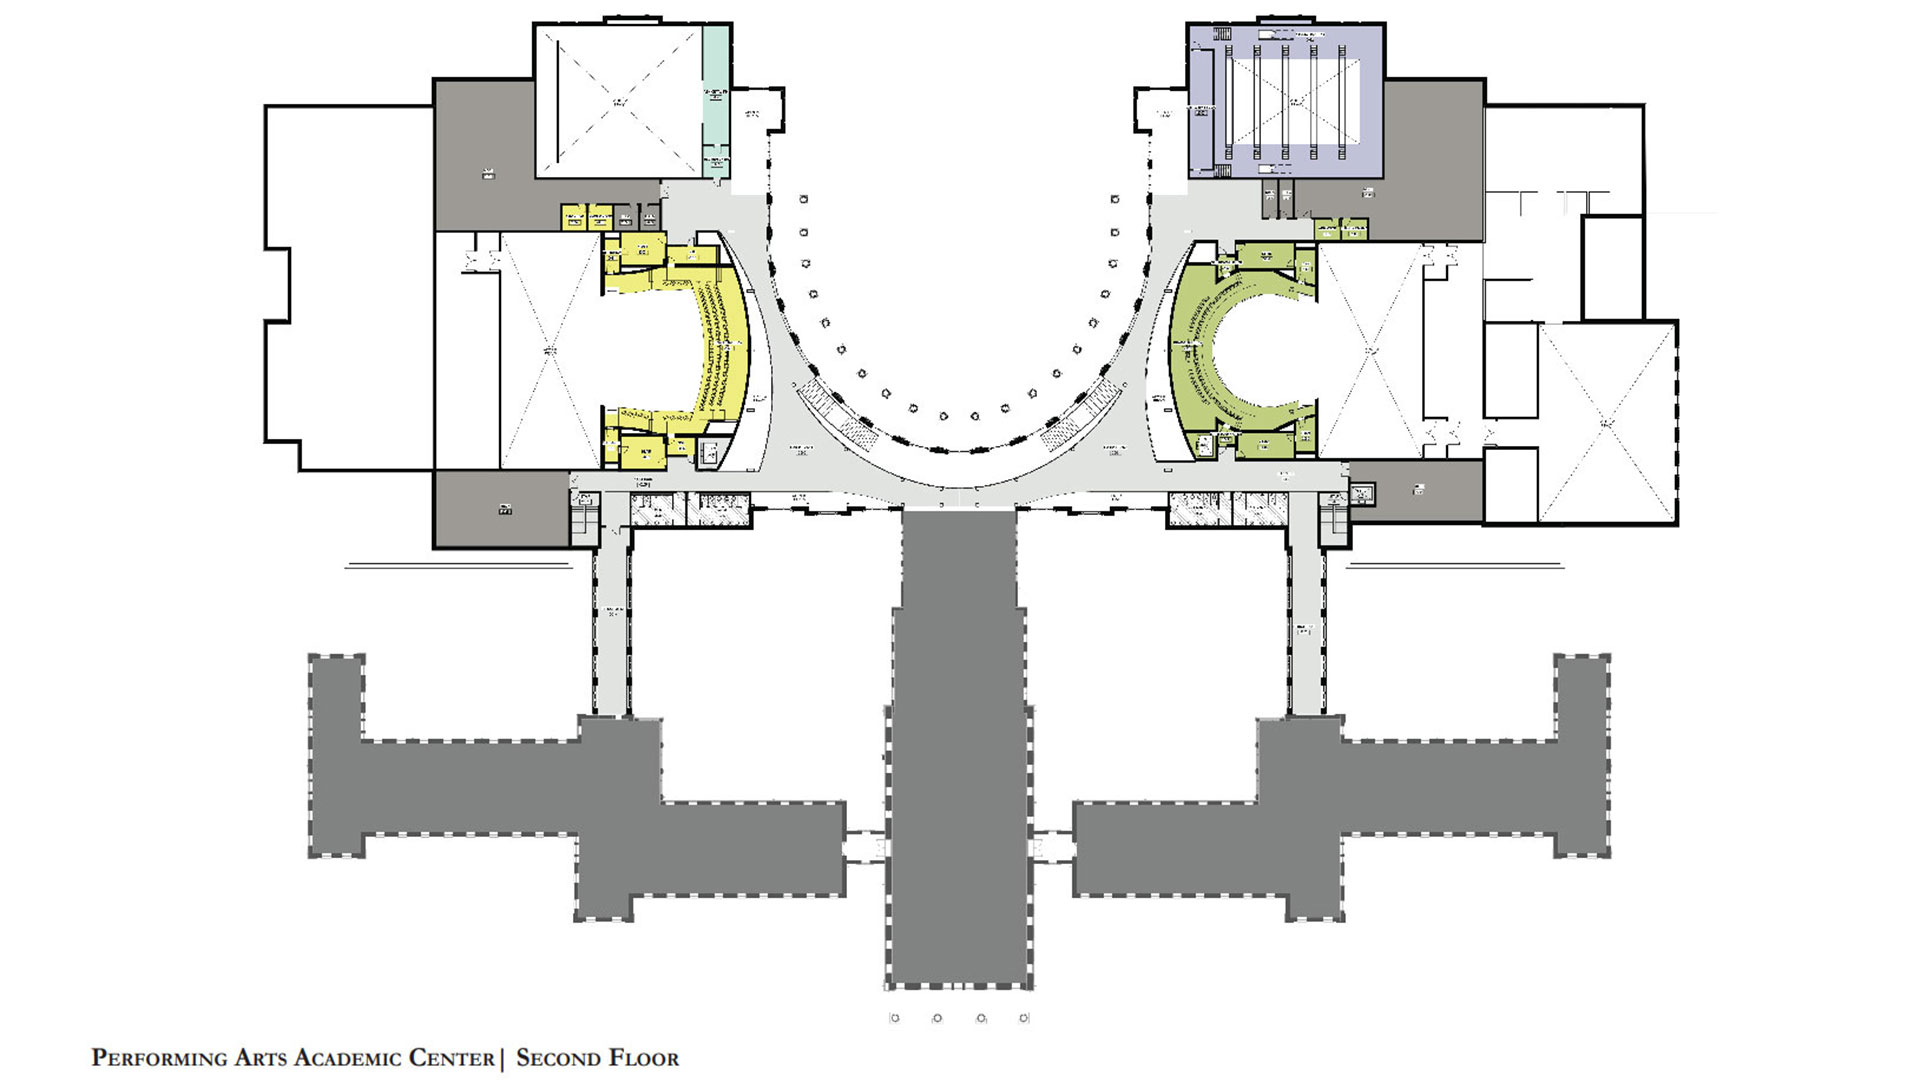 Performing Arts Academics Center Second Floor Plan